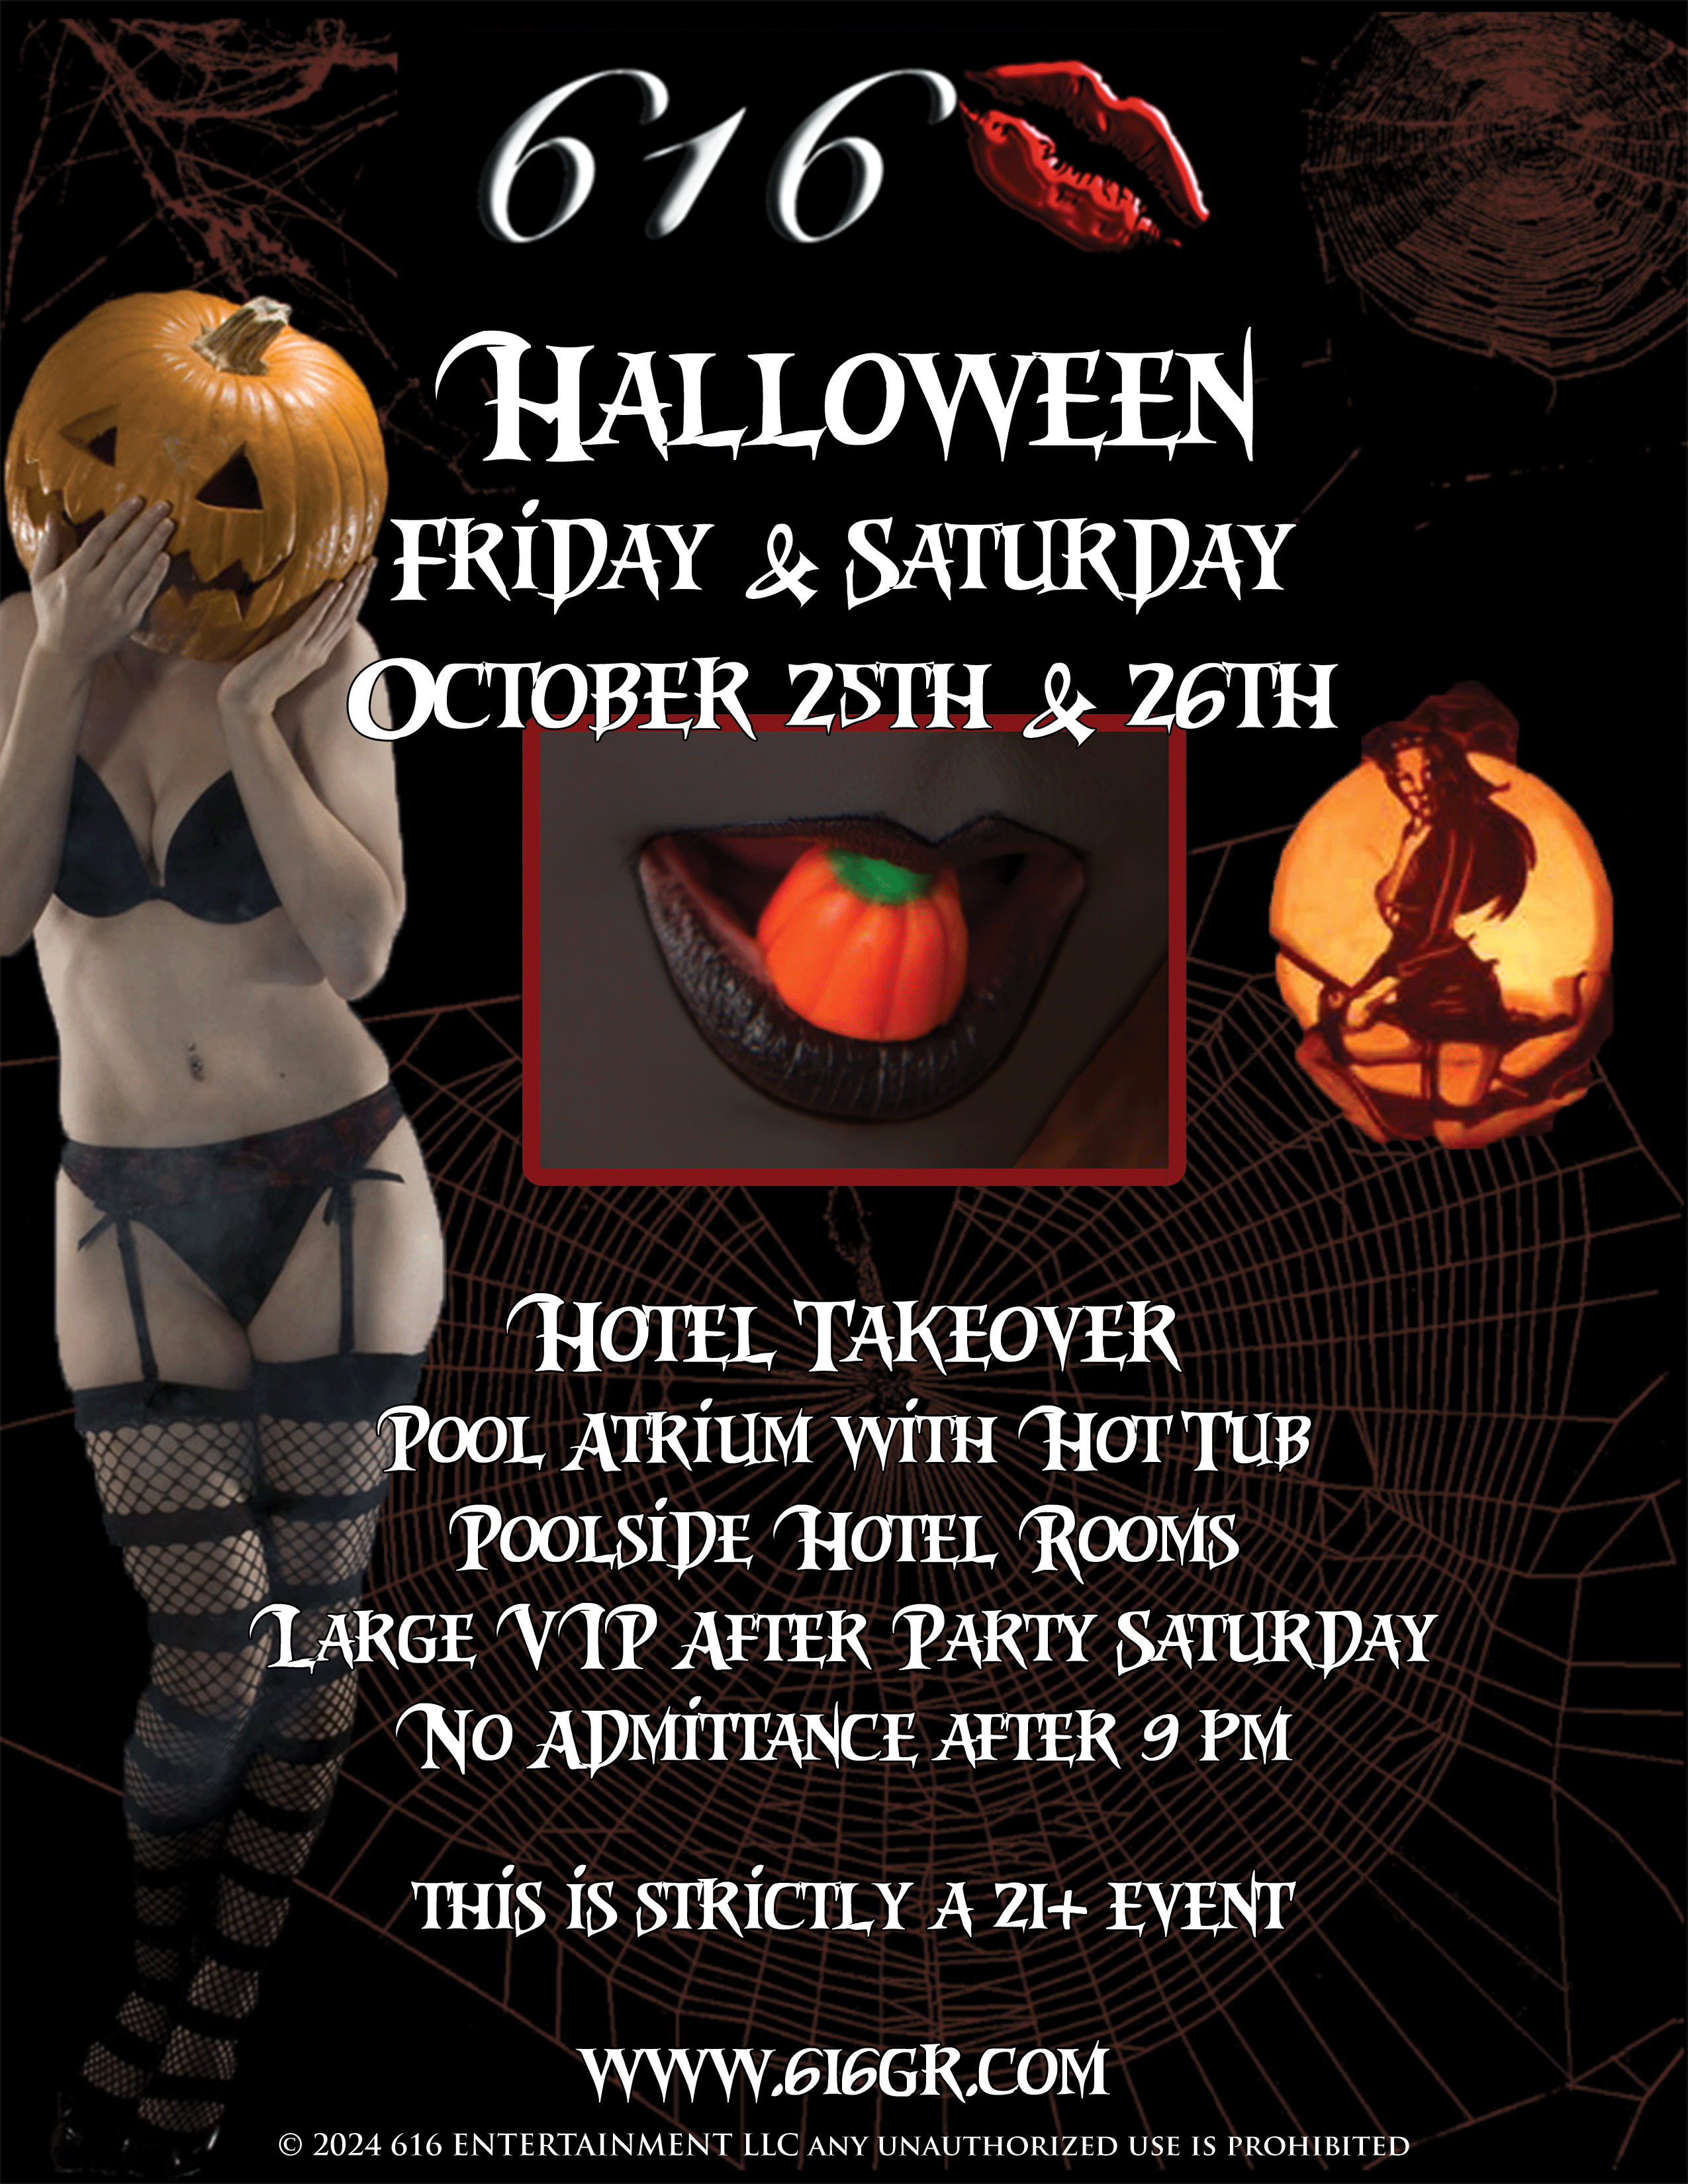 616 Halloween, Friday & Saturday October 25th & 26th.